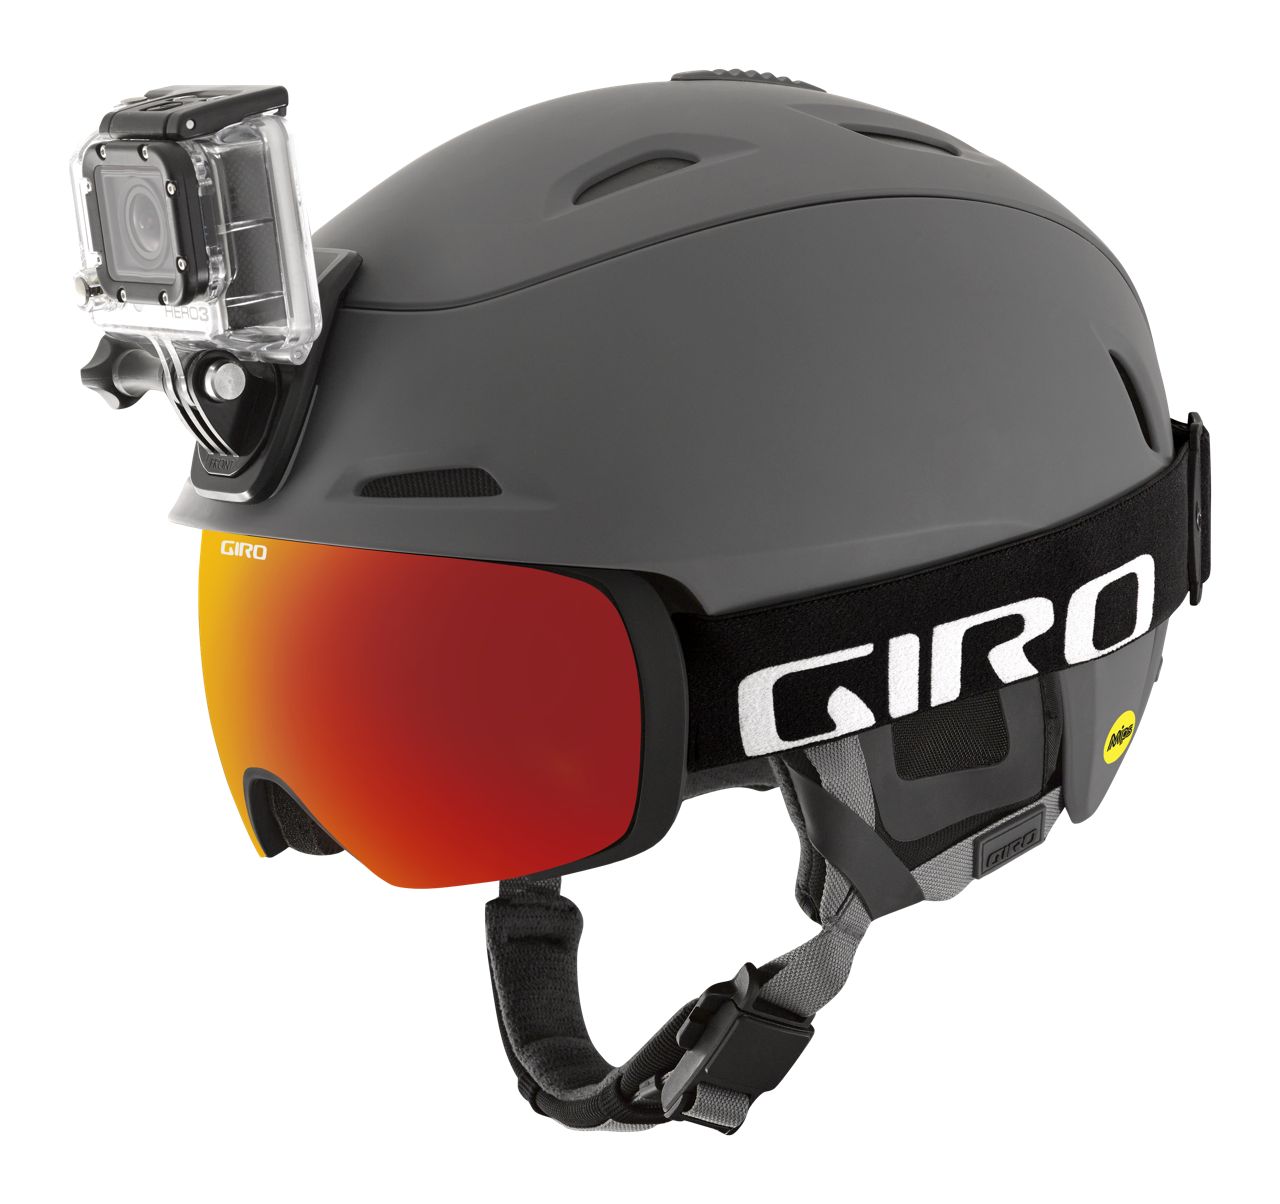 Giro helmet & goggle